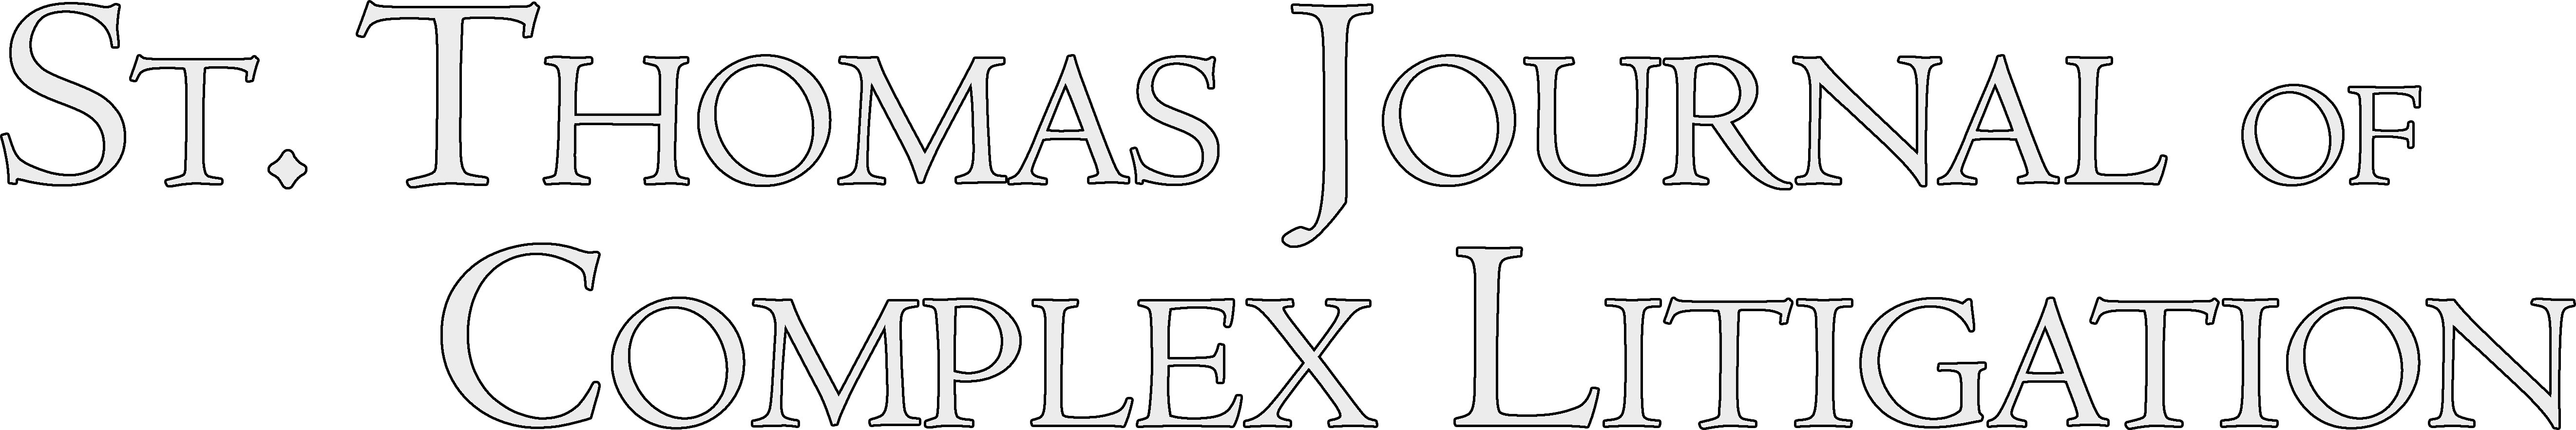 St. Thomas Journal of Complex Litigation